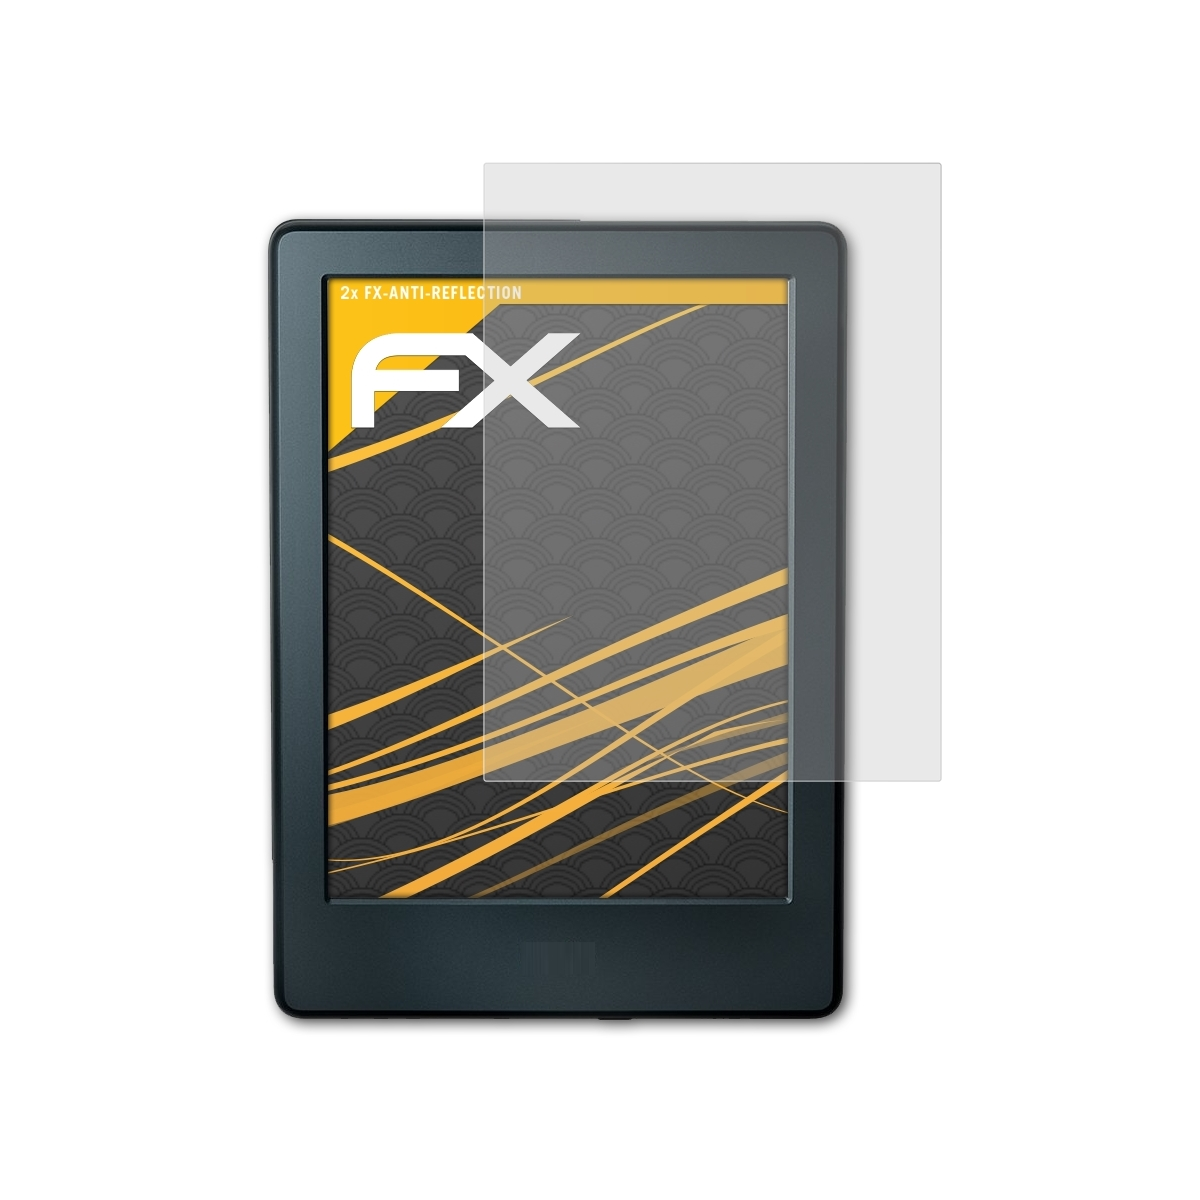 2016)) 8 Kindle (Model Displayschutz(für Amazon 2x ATFOLIX FX-Antireflex